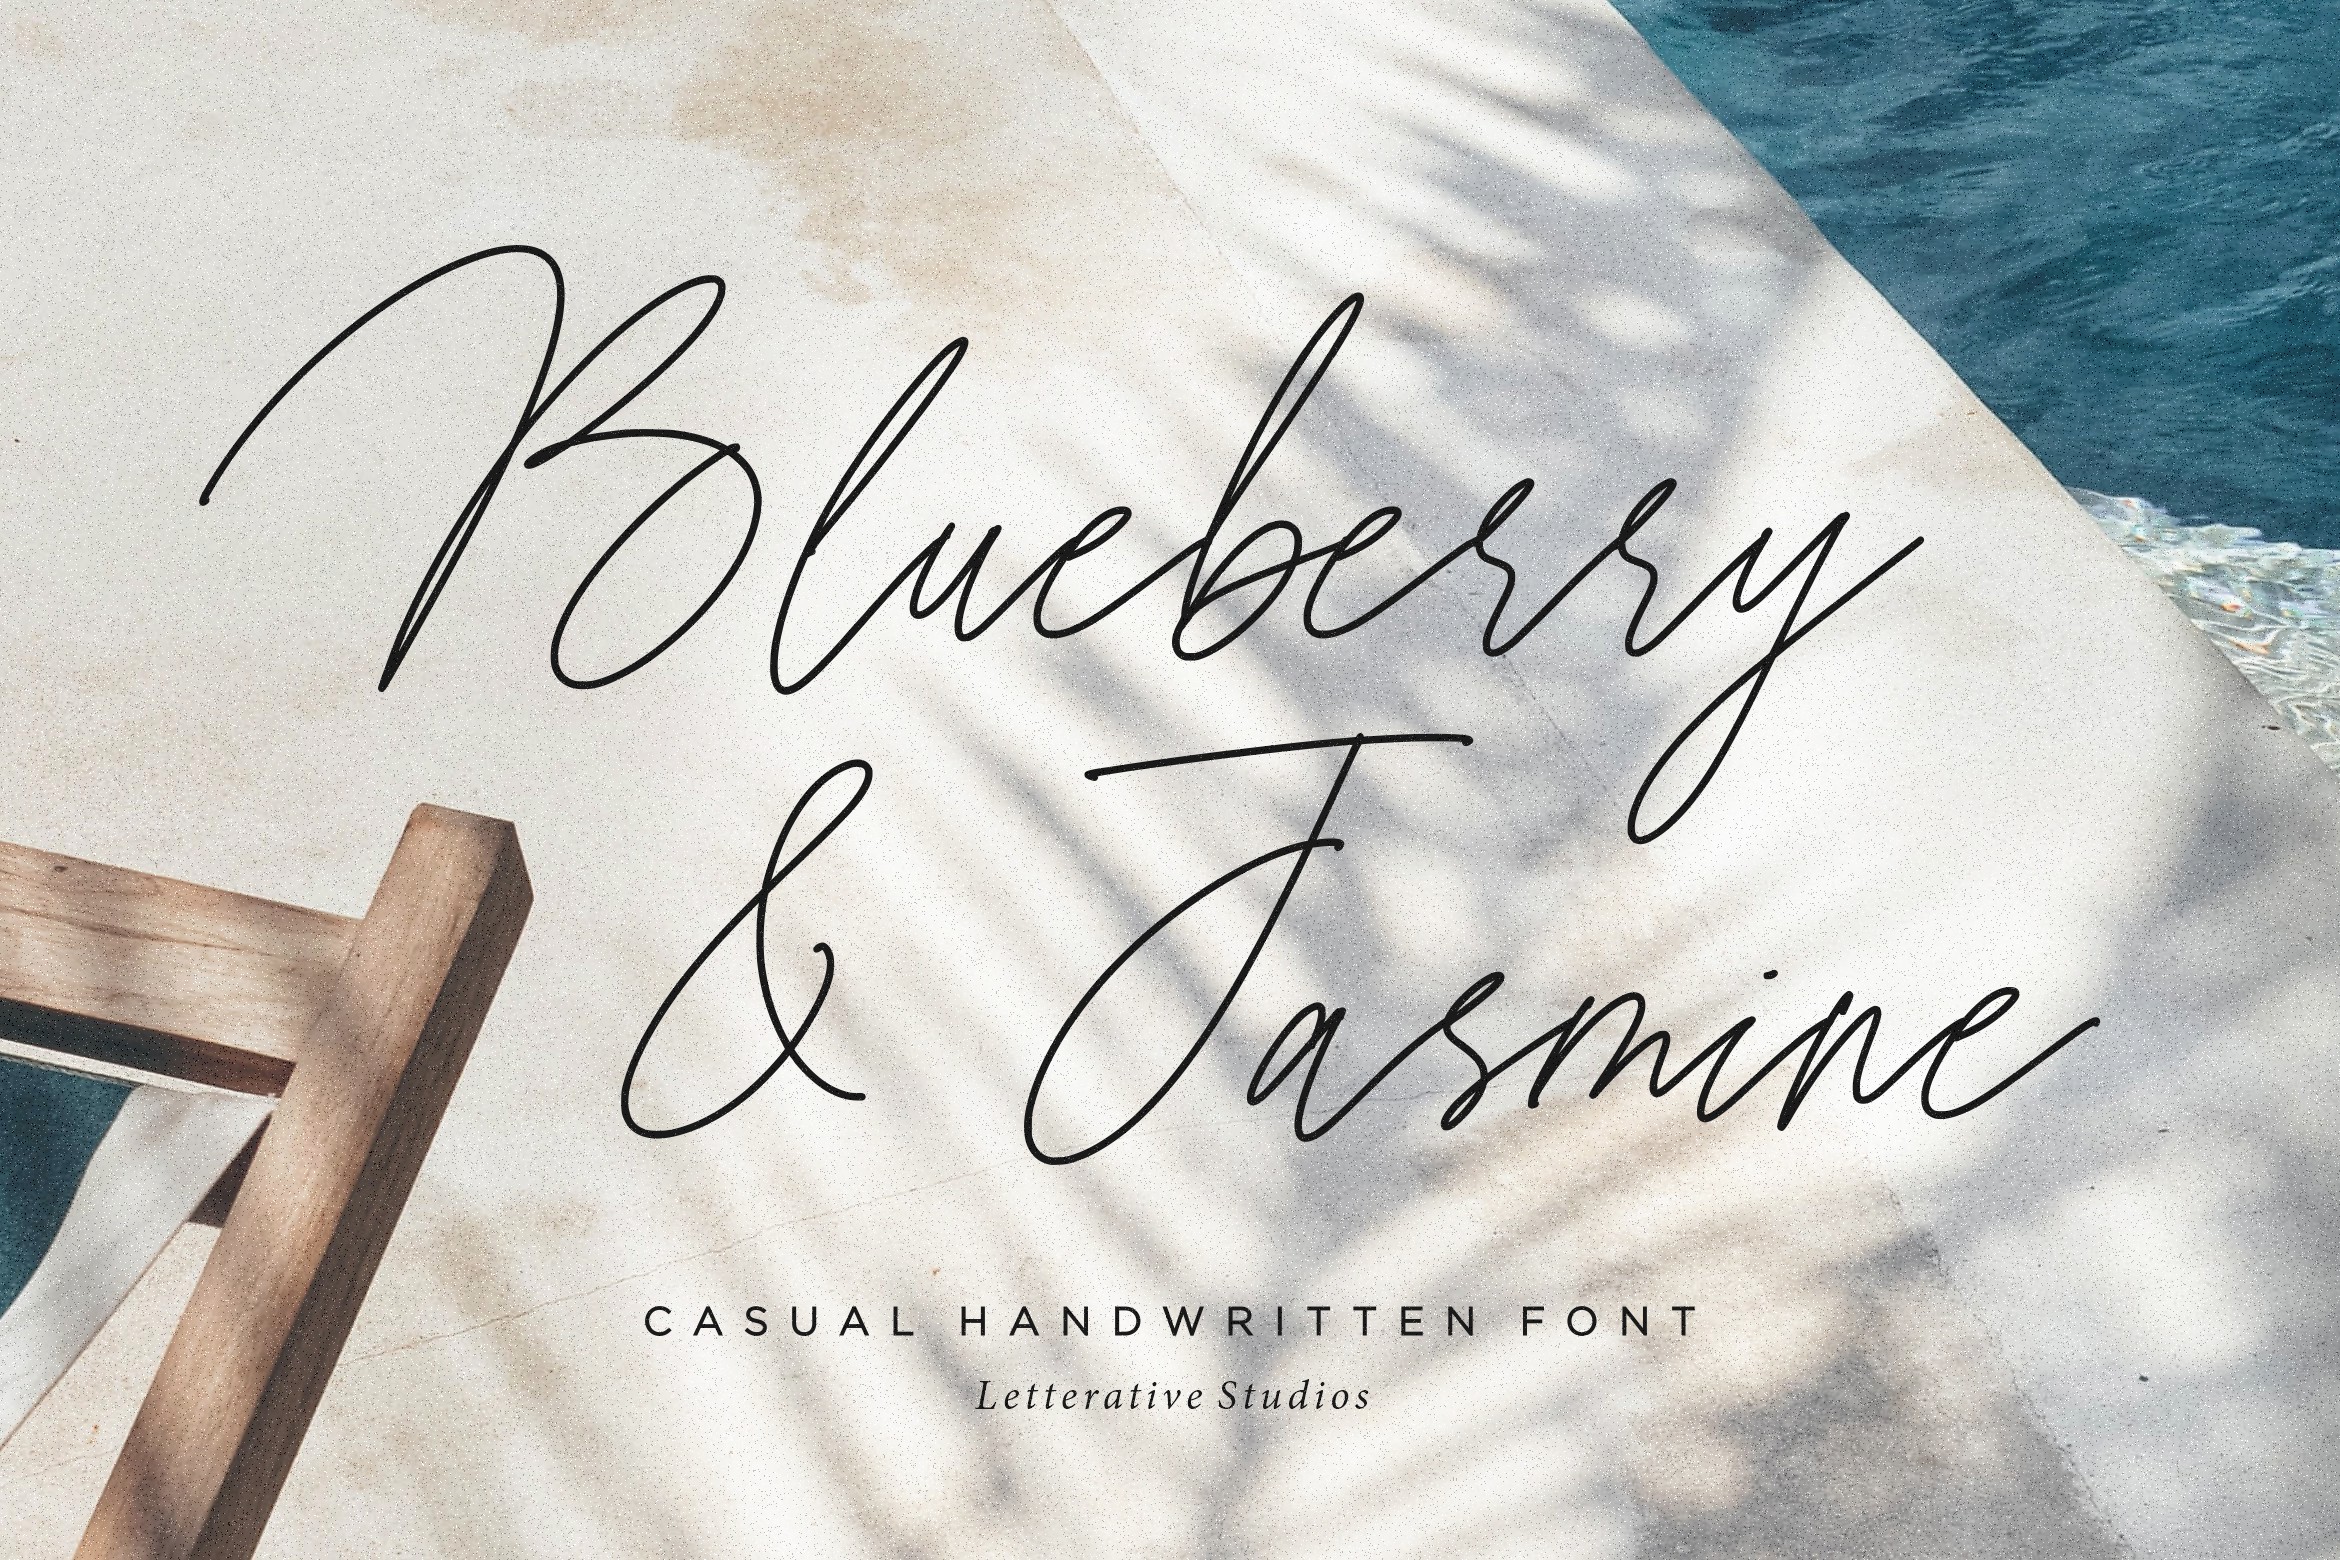 Blueberry & Jasmine